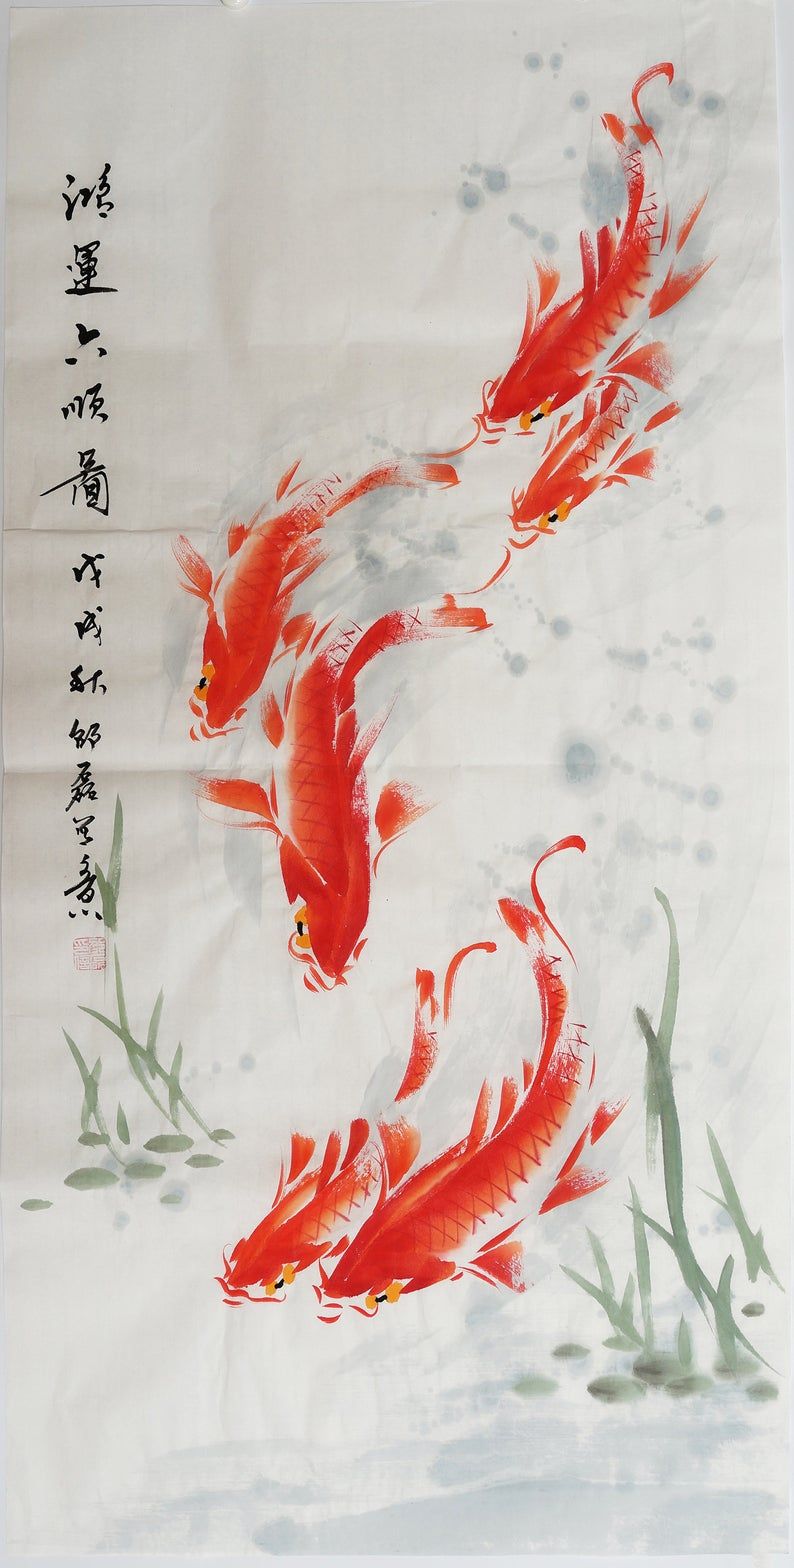 100% Hand Painted Chinese Watercolor Koi Fish Art Slender Australia. Koi Watercolor, Fish Painting, Ink Wash Painting